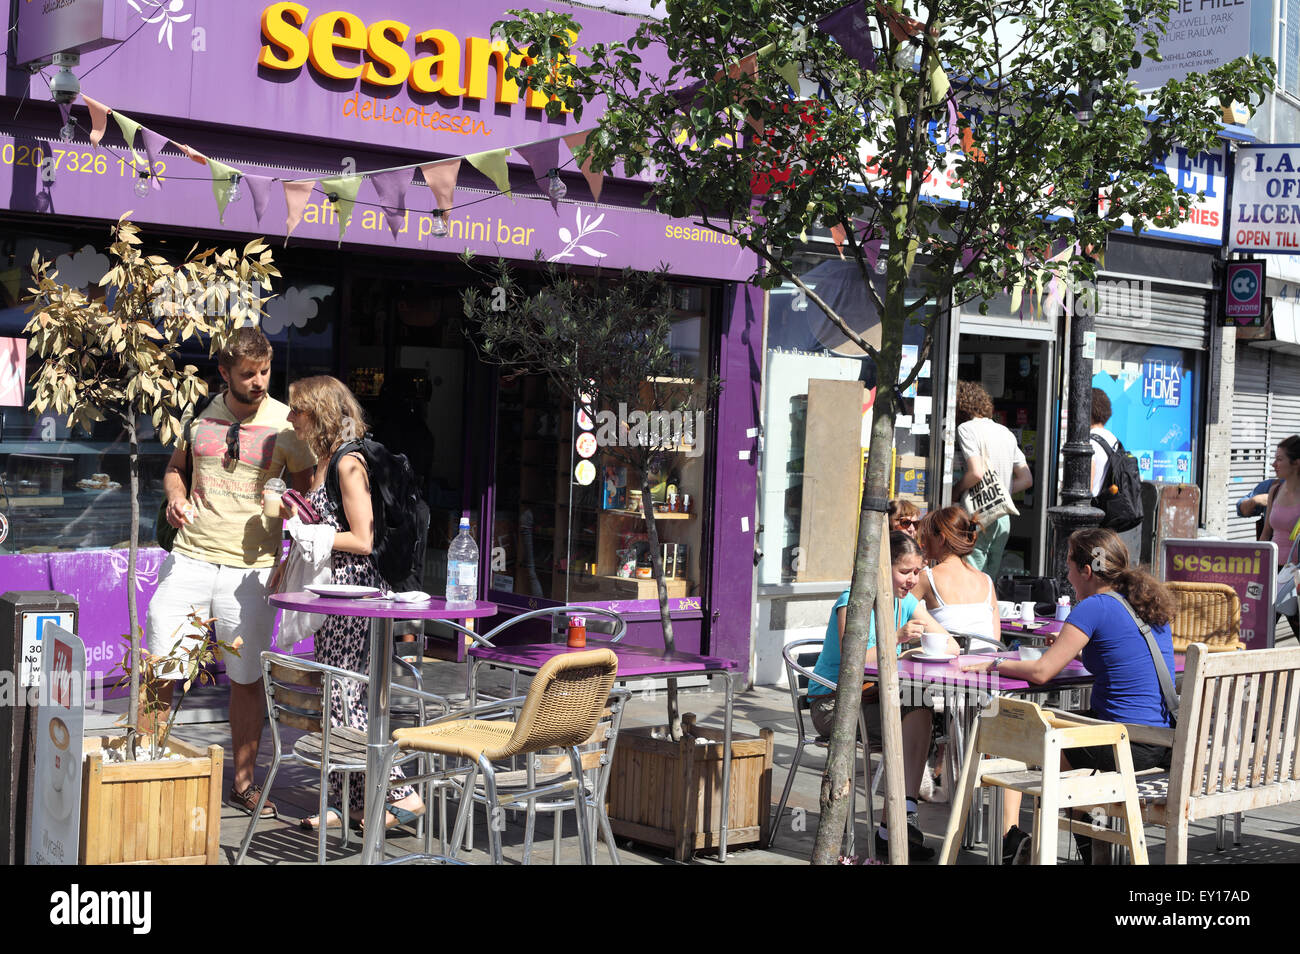 Sesami cafe and delicatessen, Railton road, Herne Hill, SE24 London Stock Photo